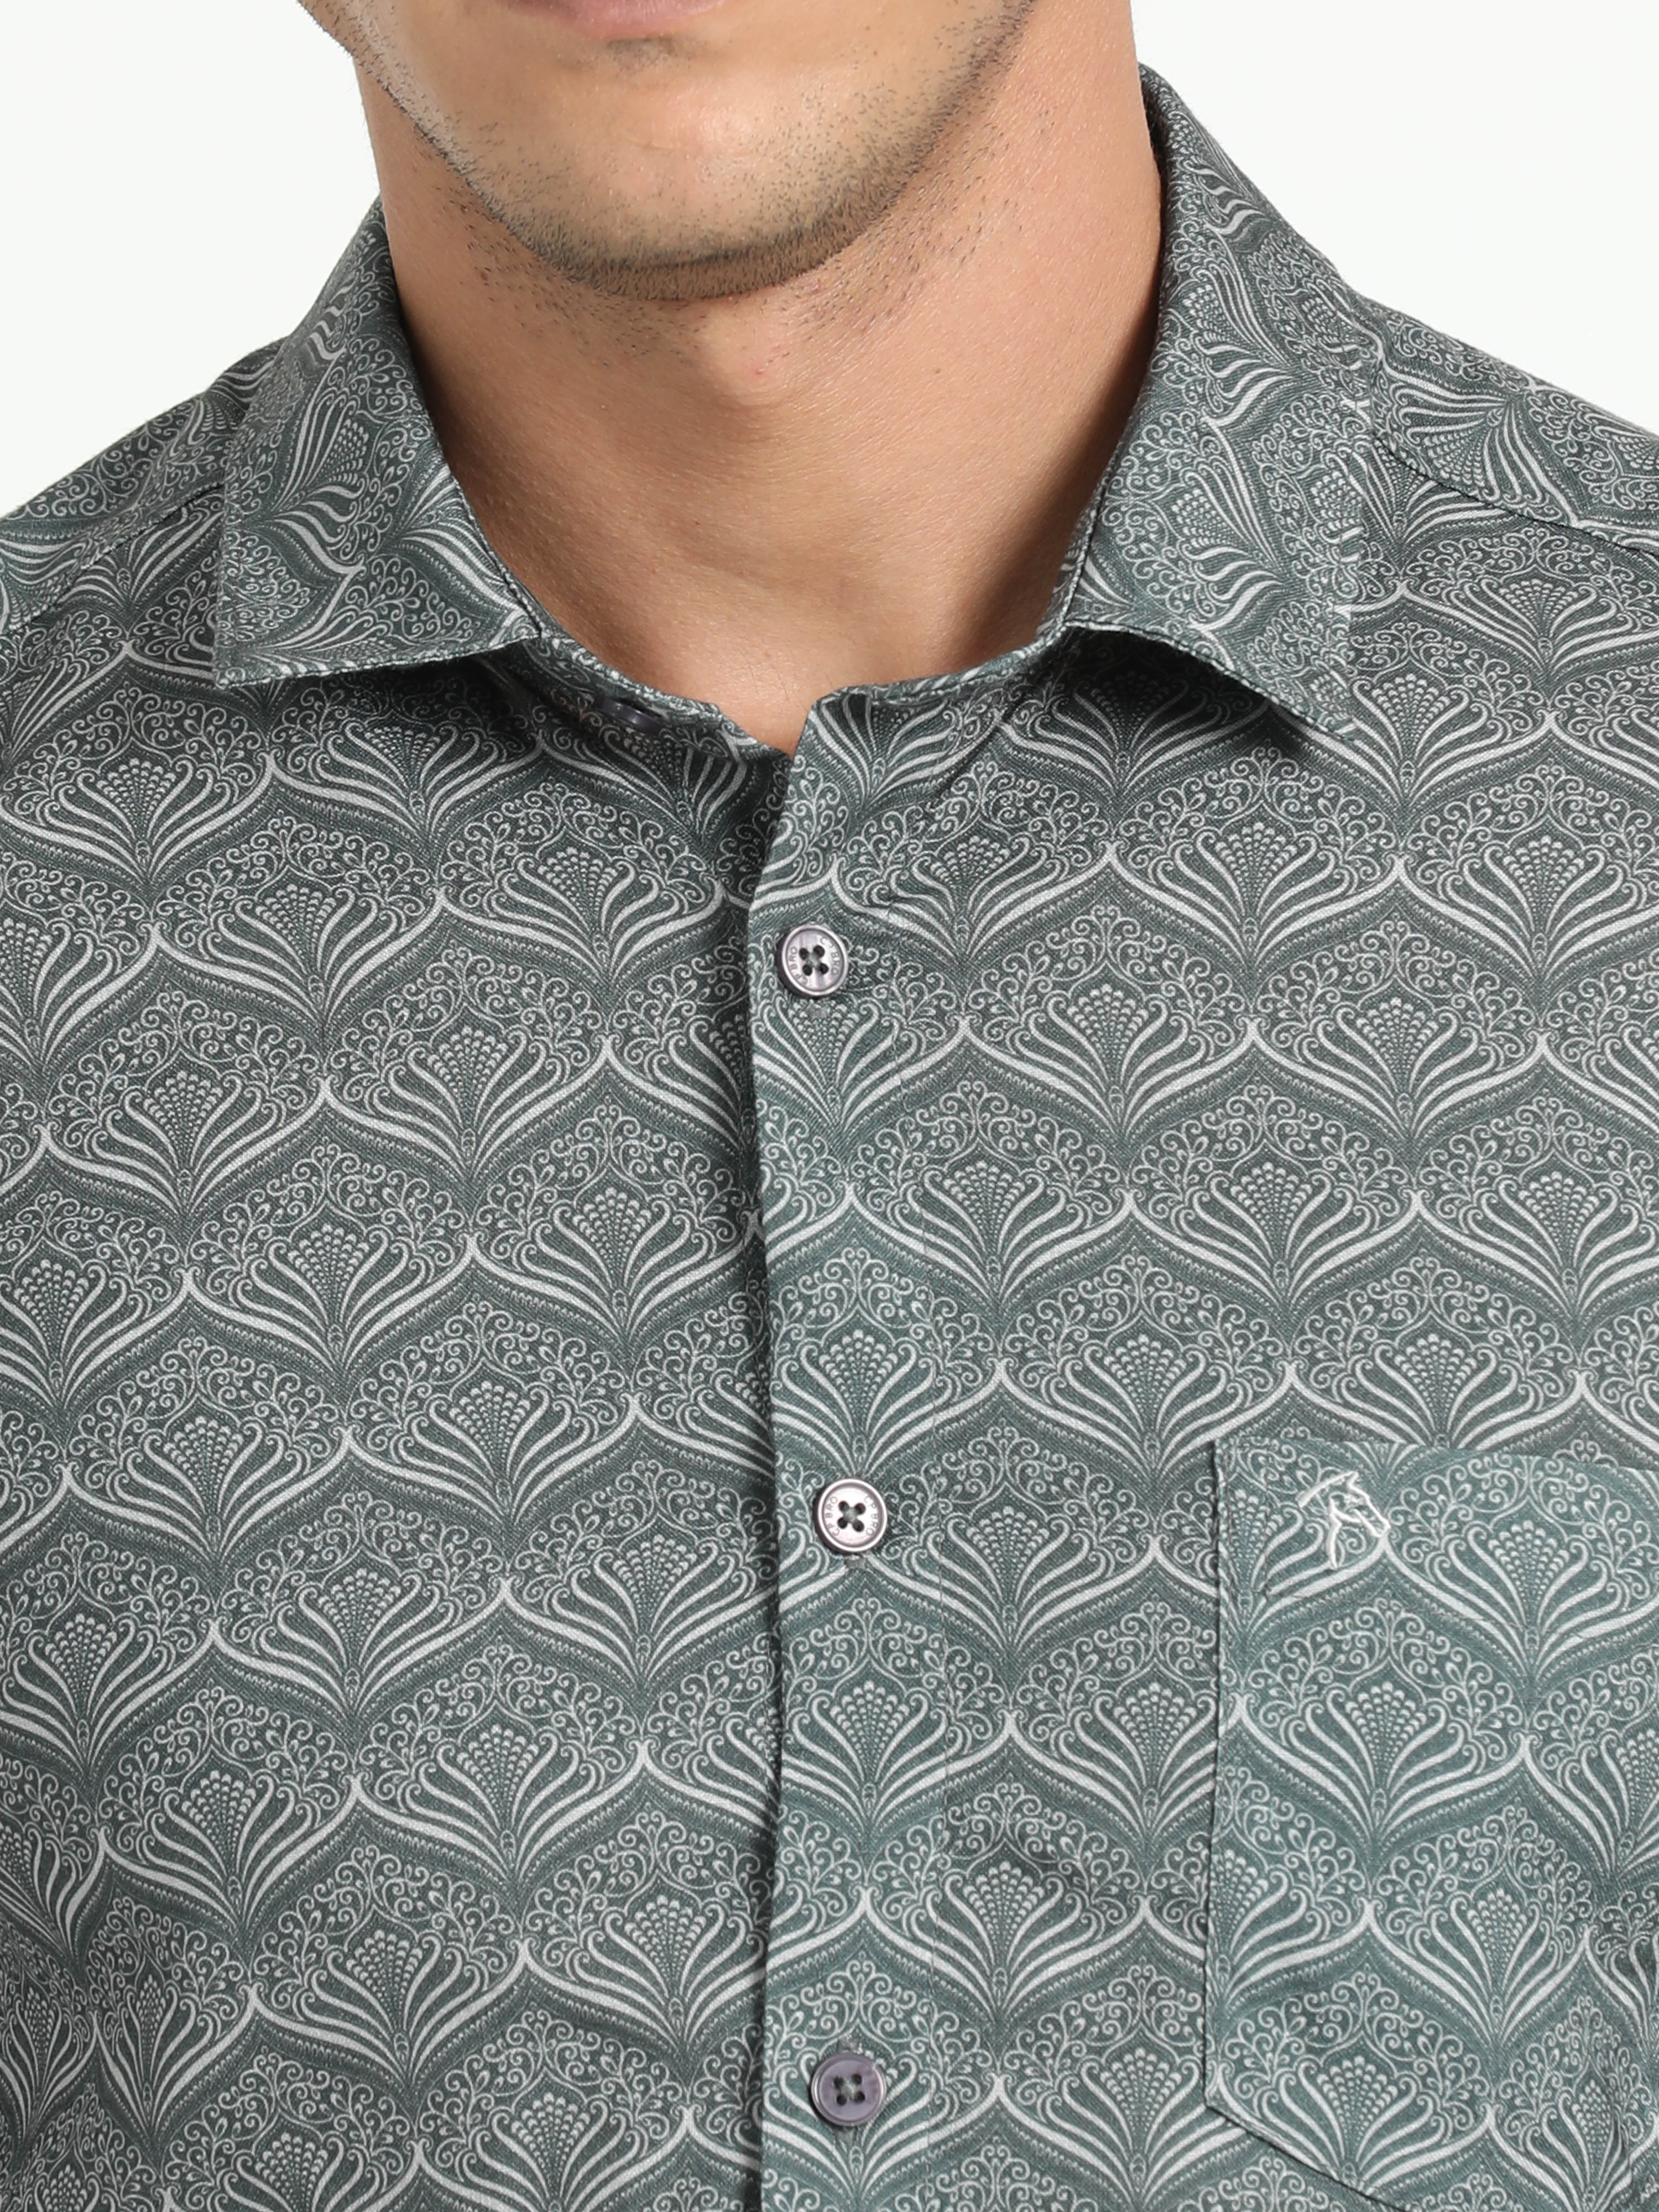 Cp Bro Men's Printed Grey Cotton Full Sleeve Woven Shirt | SBO2-70 A-FS-PRT-BSL